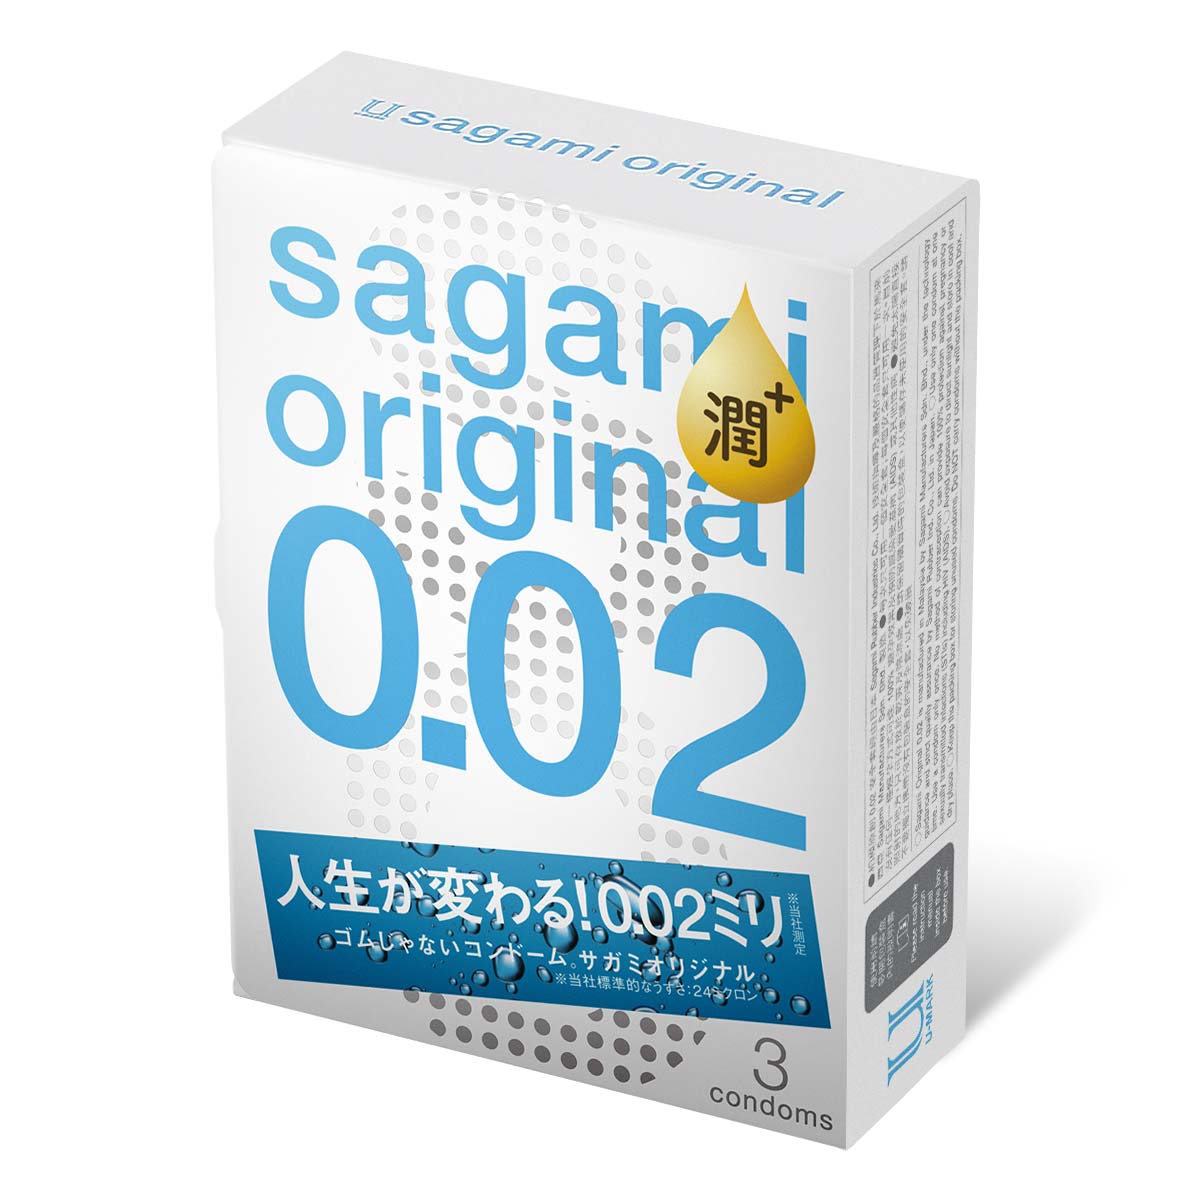 Sagami Original 0.02 Extra Lubricated (2nd generation) 3's Pack PU Condom-p_1